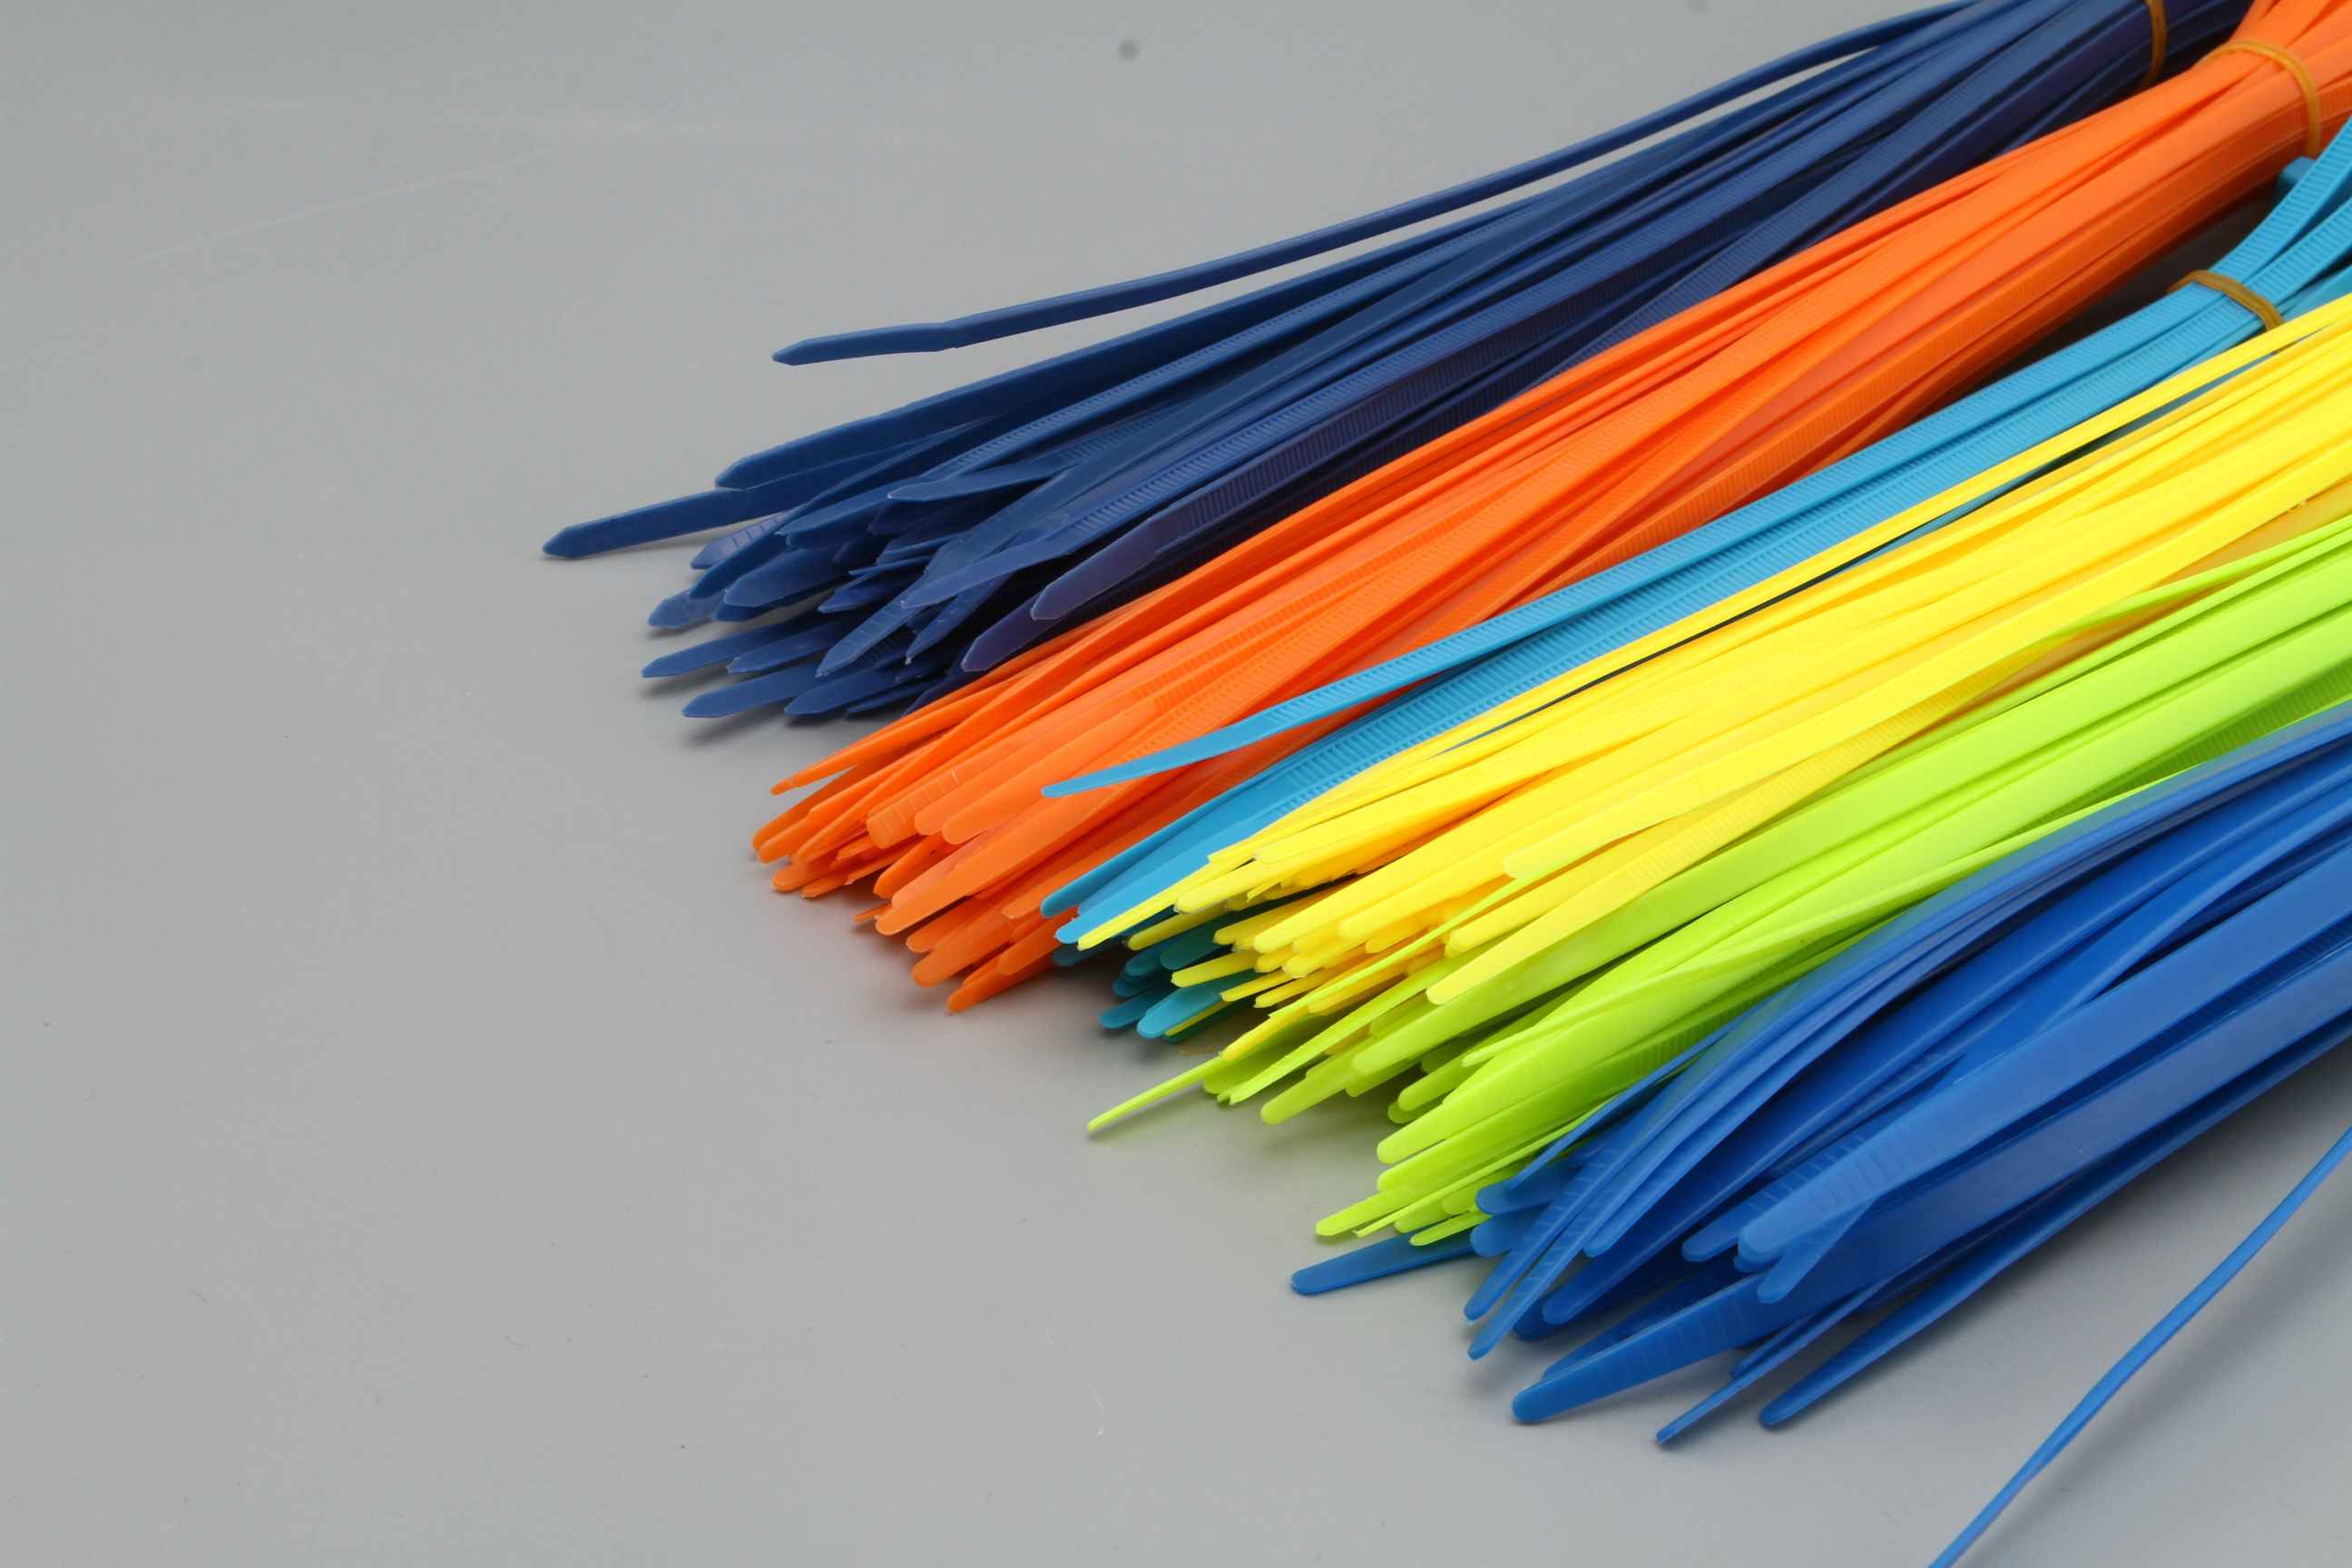 Fish bone nylon cable ties - 0